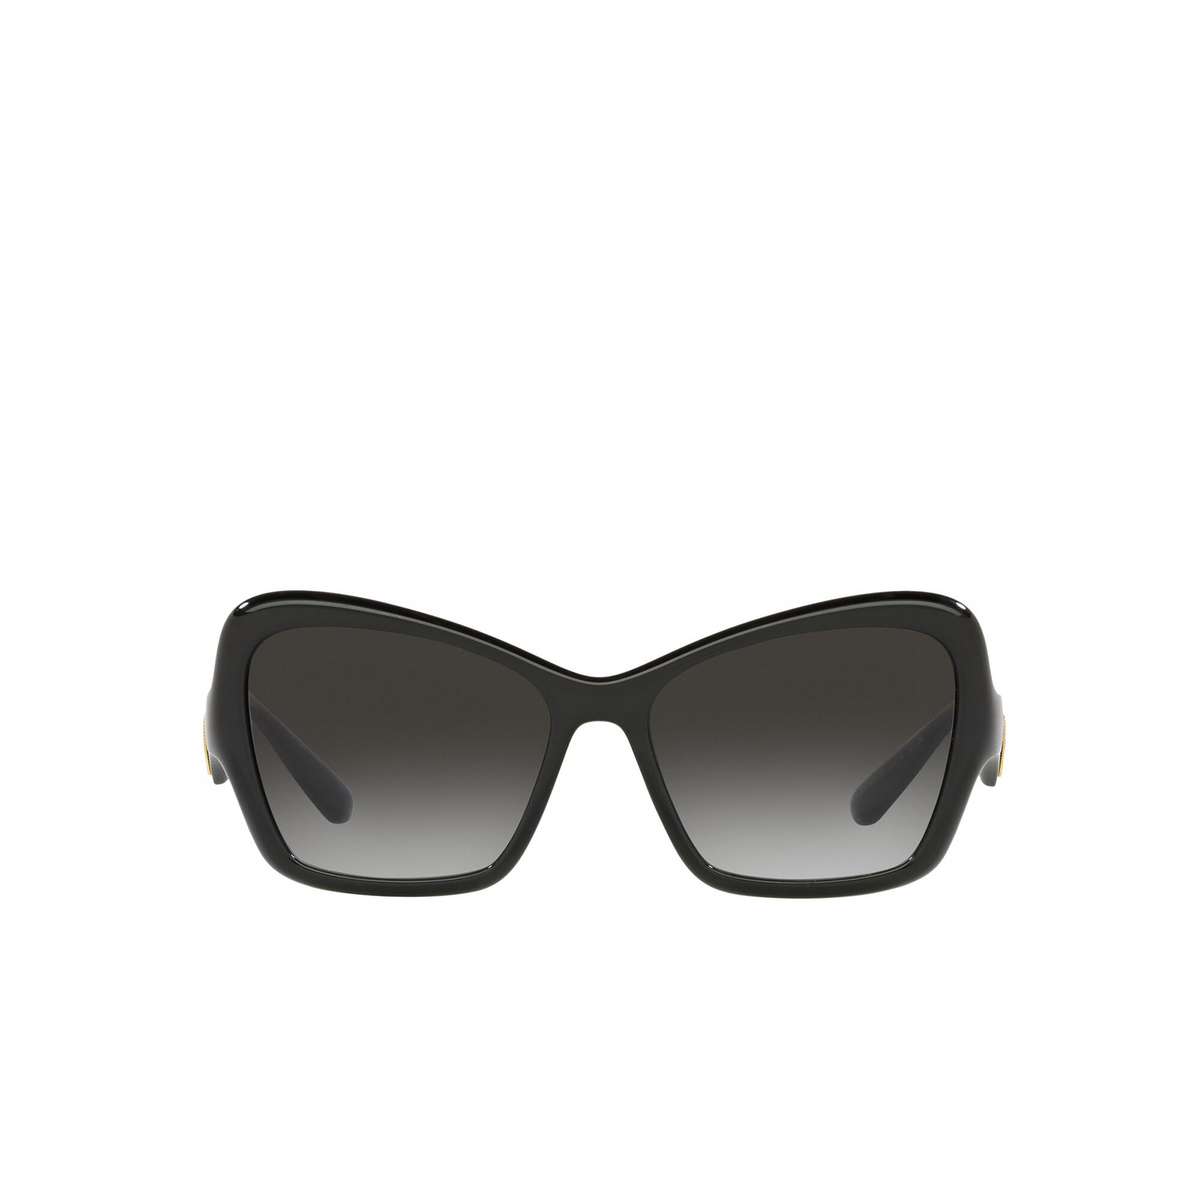 Dolce & Gabbana® Cat-eye Sunglasses: DG6153 color Black 501/8G - front view.